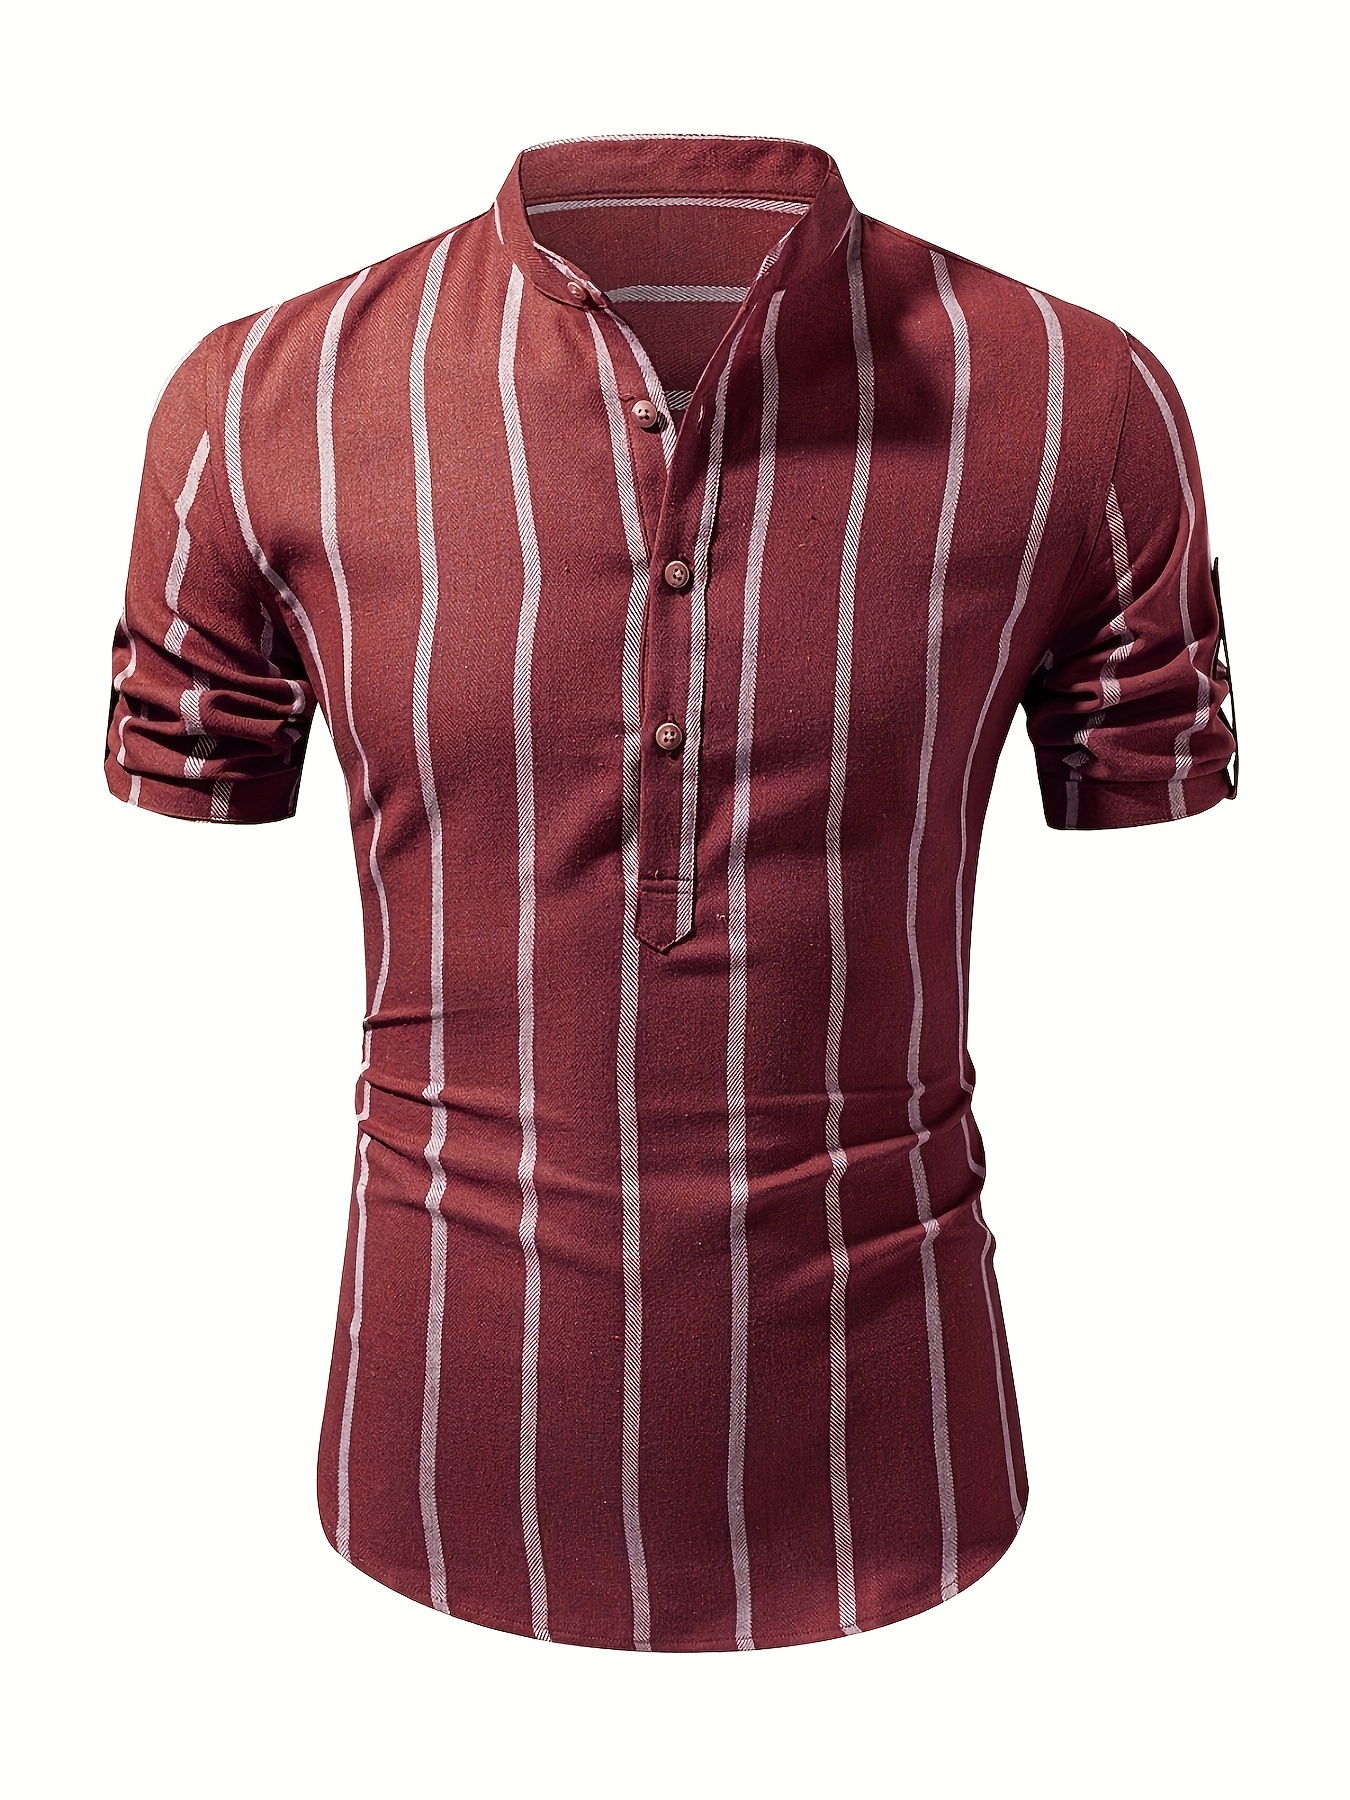 Radio-controlled watch hand men's summer turtleneck mesh shirt short sleeve fishing  net clothing trendy striped shirt men's T-shirts, brown, S : :  Fashion